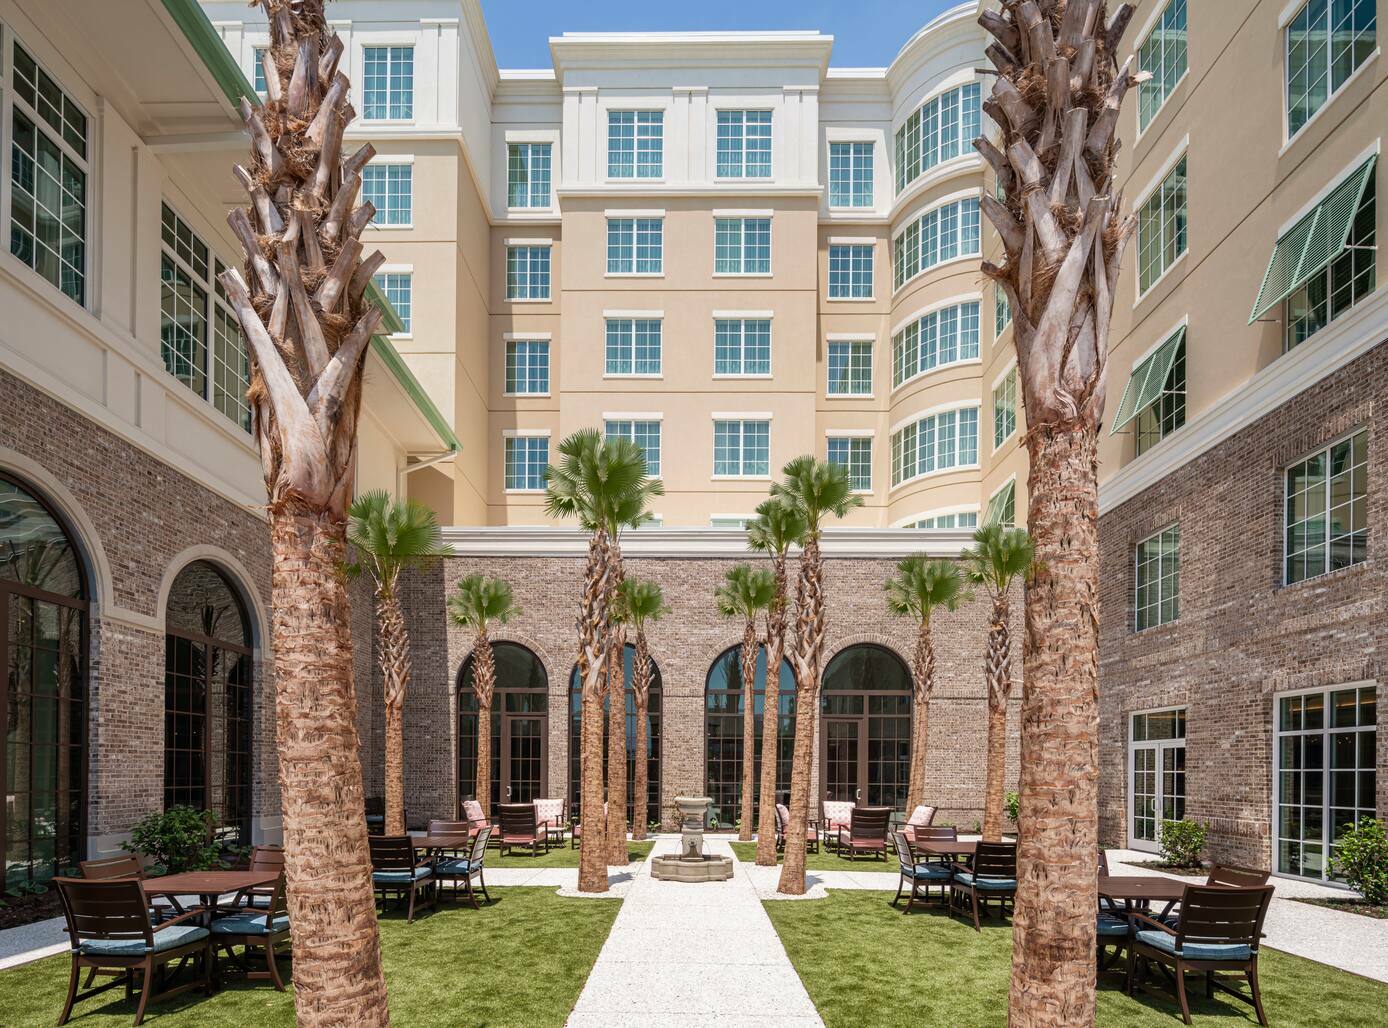 Photo of Embassy Suites by Hilton Charleston Harbor Mt. Pleasant, Mt. Pleasant, SC